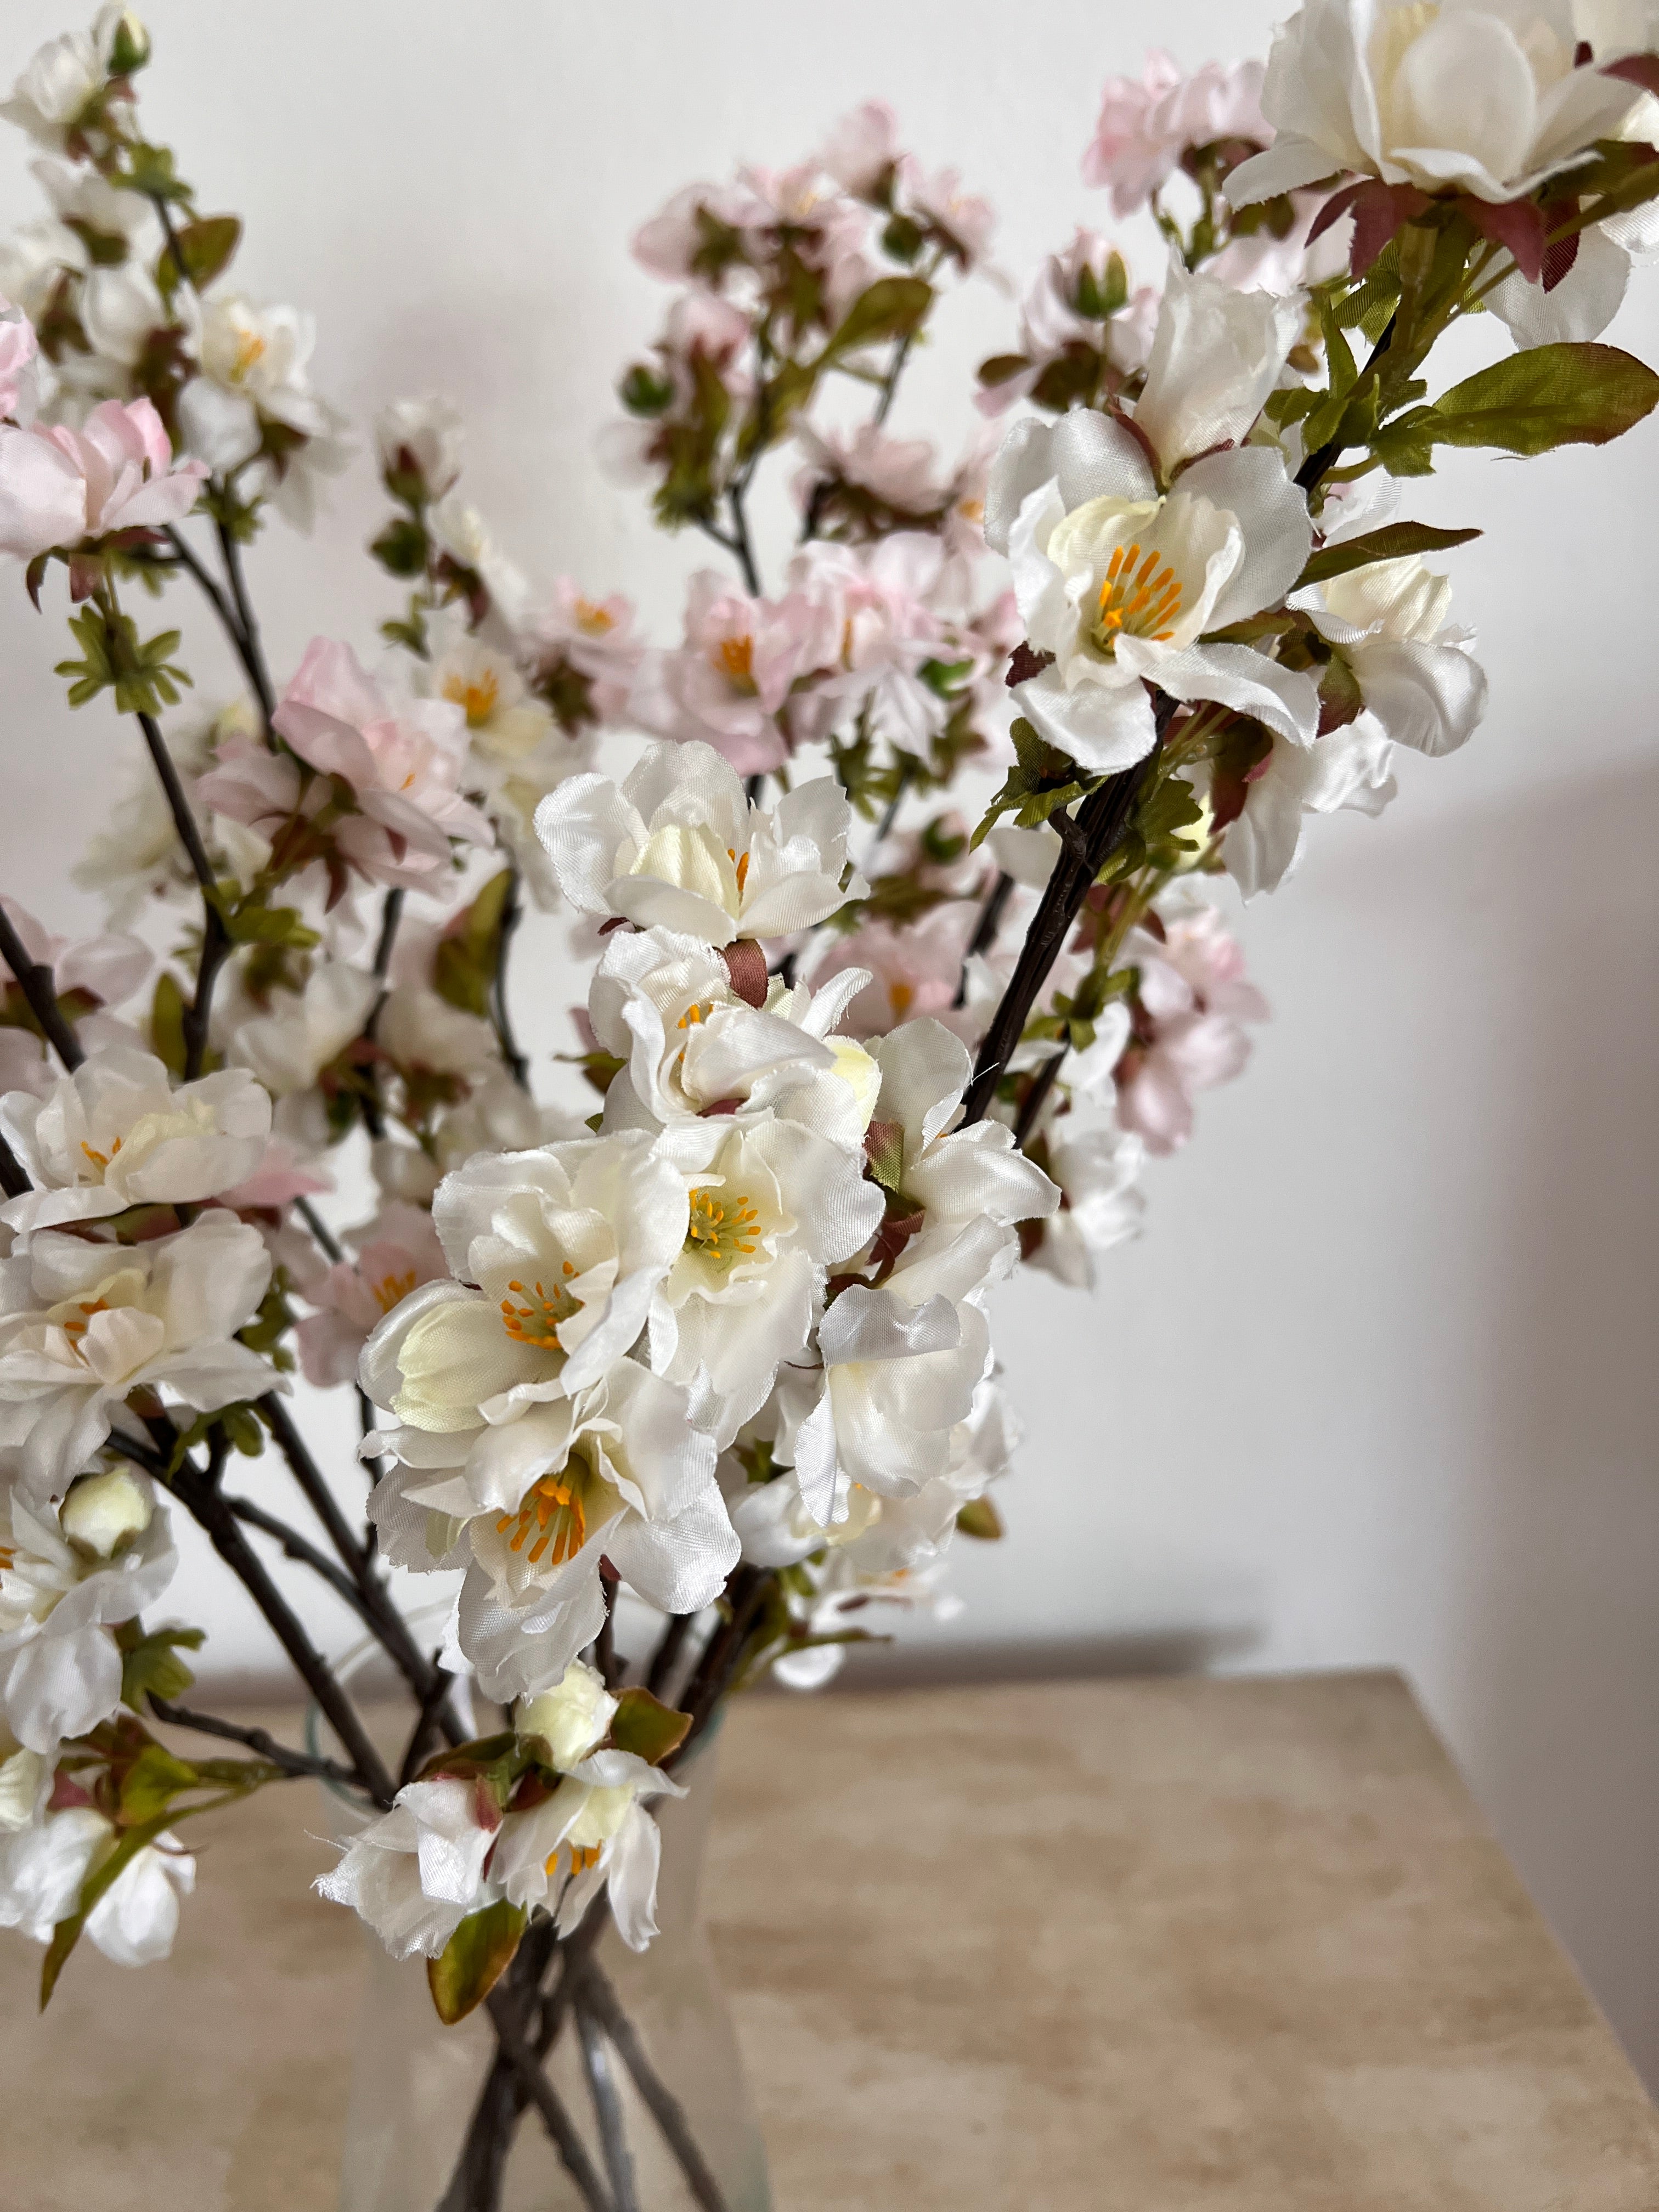 Blossom arrangement